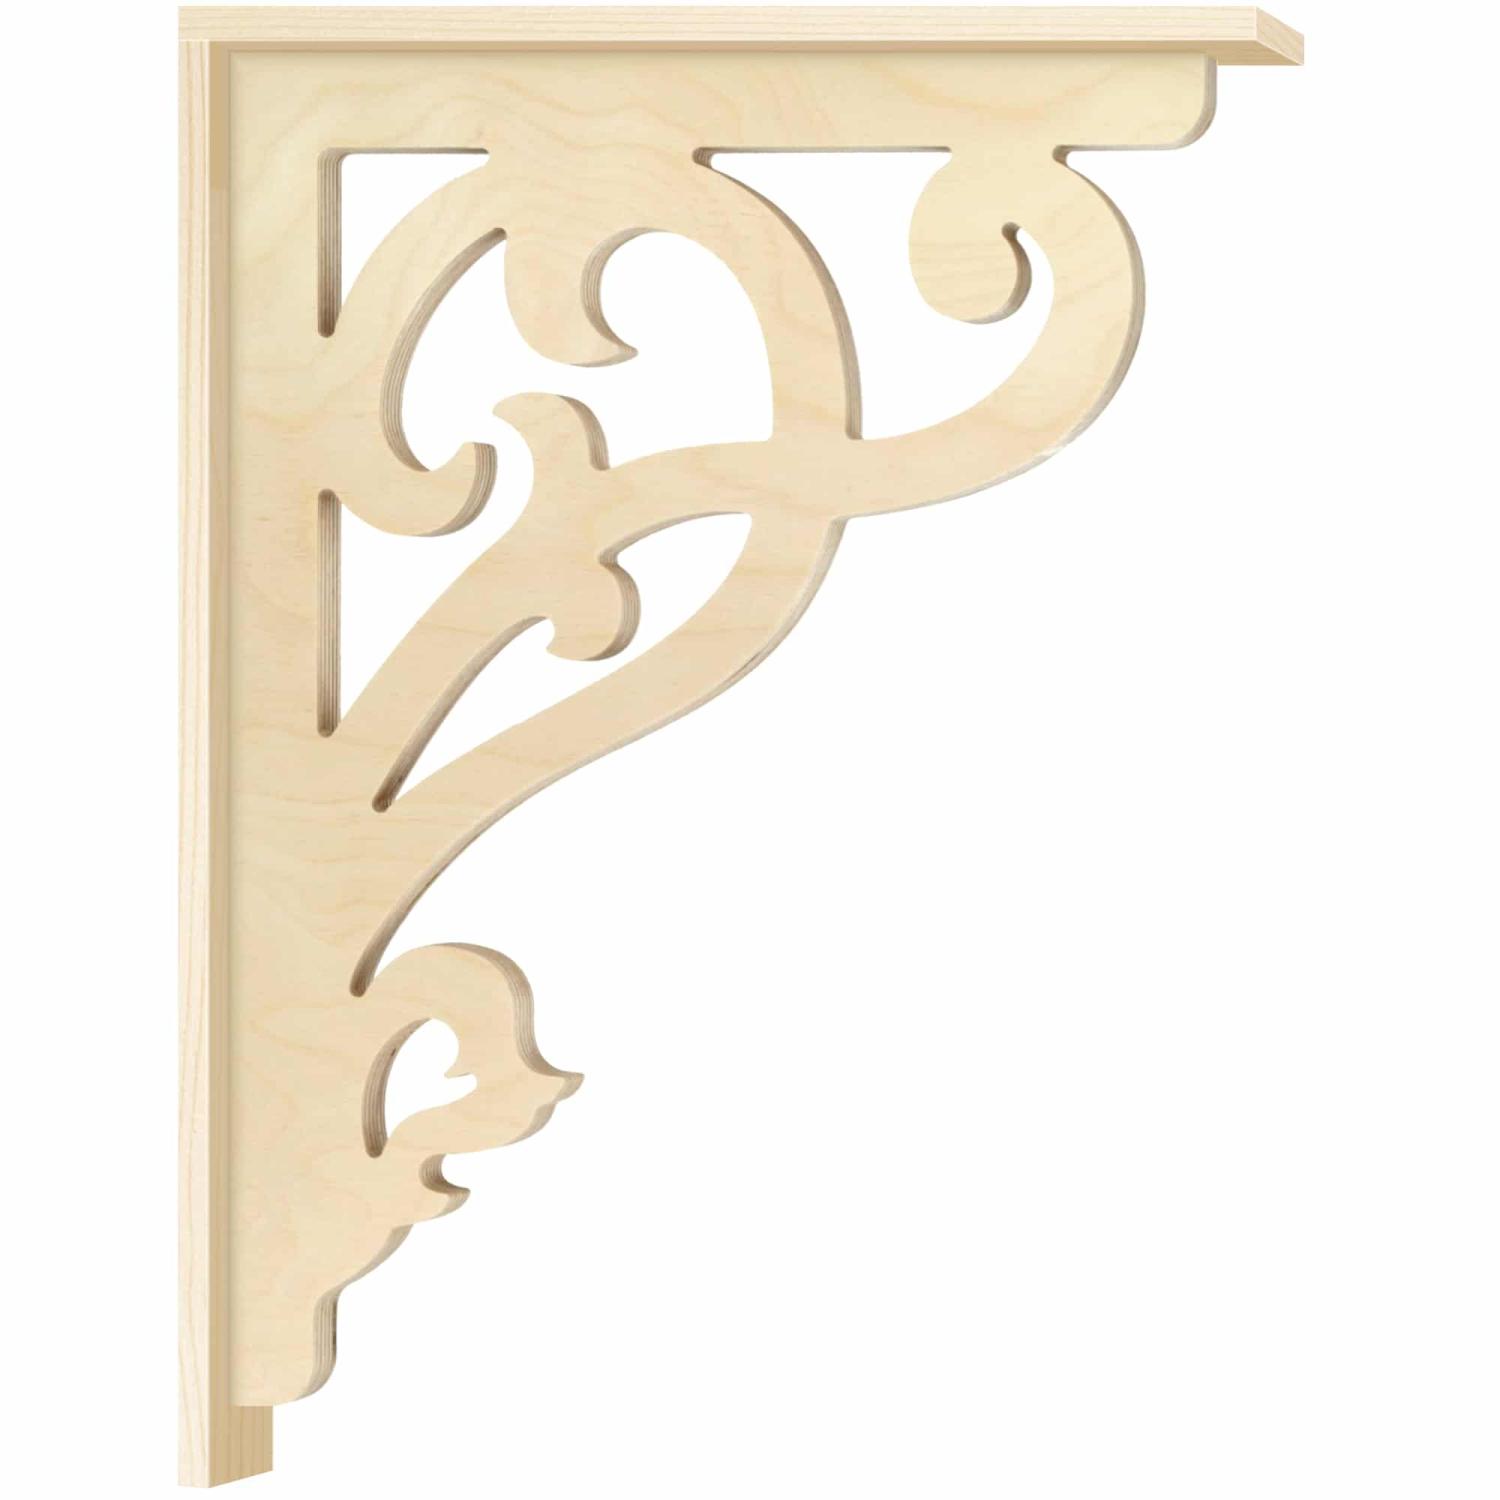 Bracket 009 – Victorian corbel for porch and veranda with decorative wooden strip